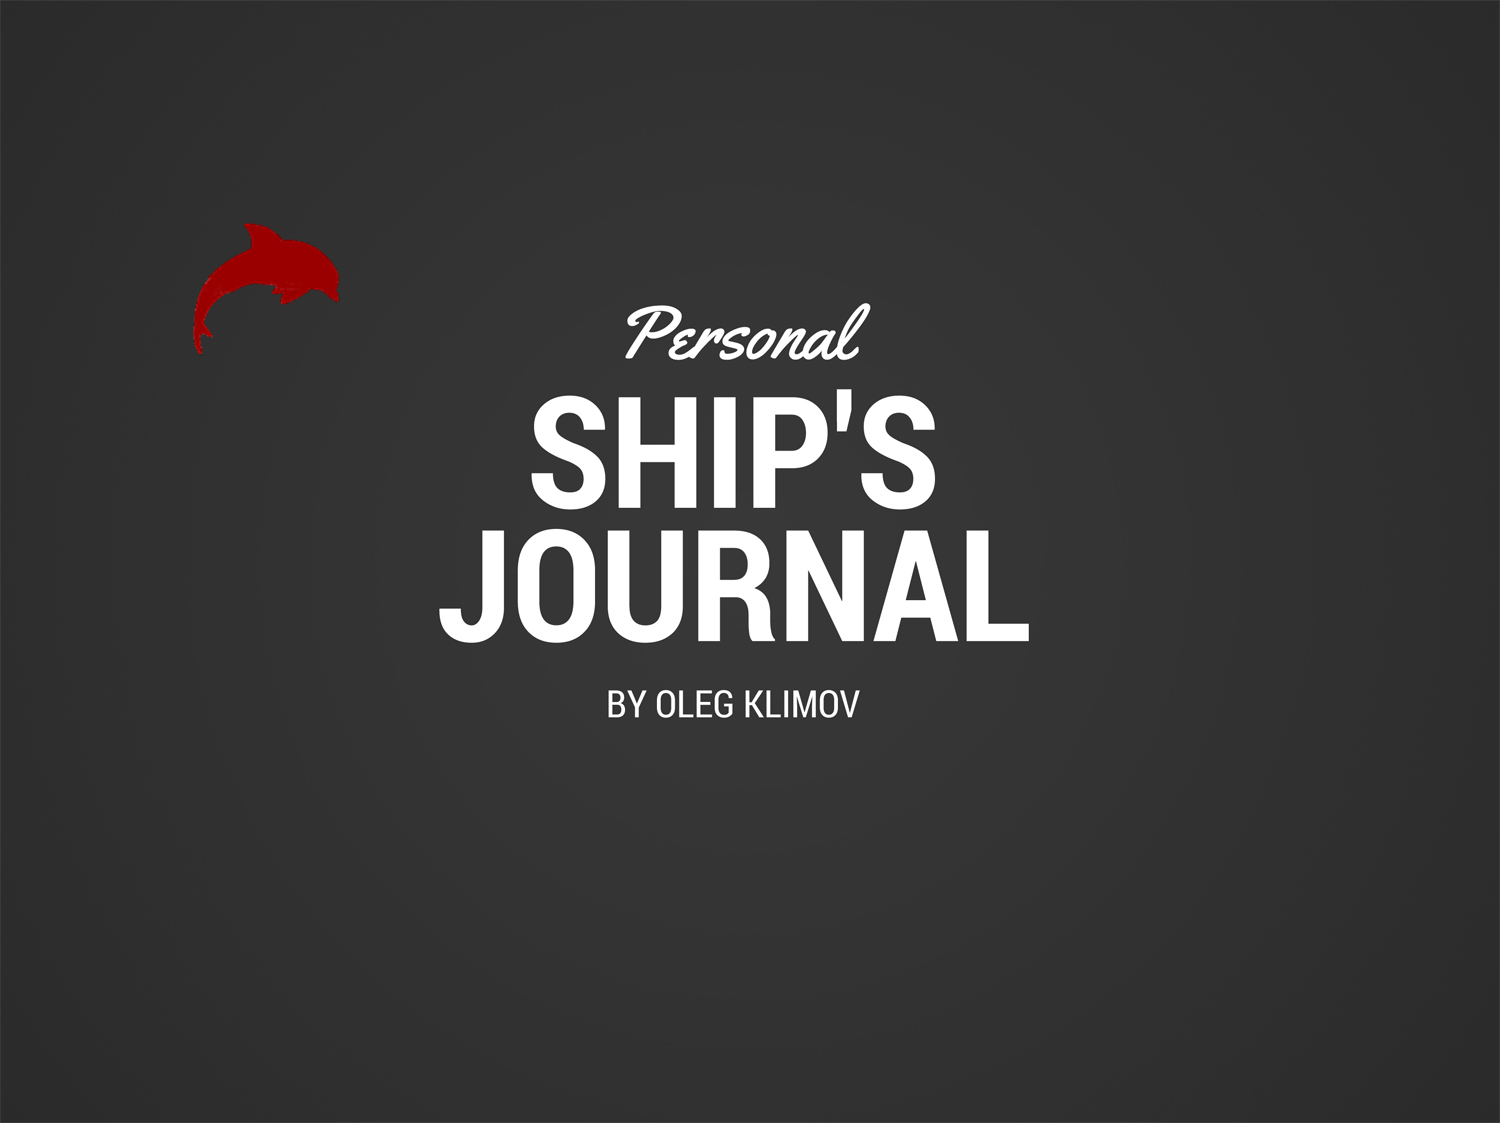 Ship's journal by Oleg Klimov